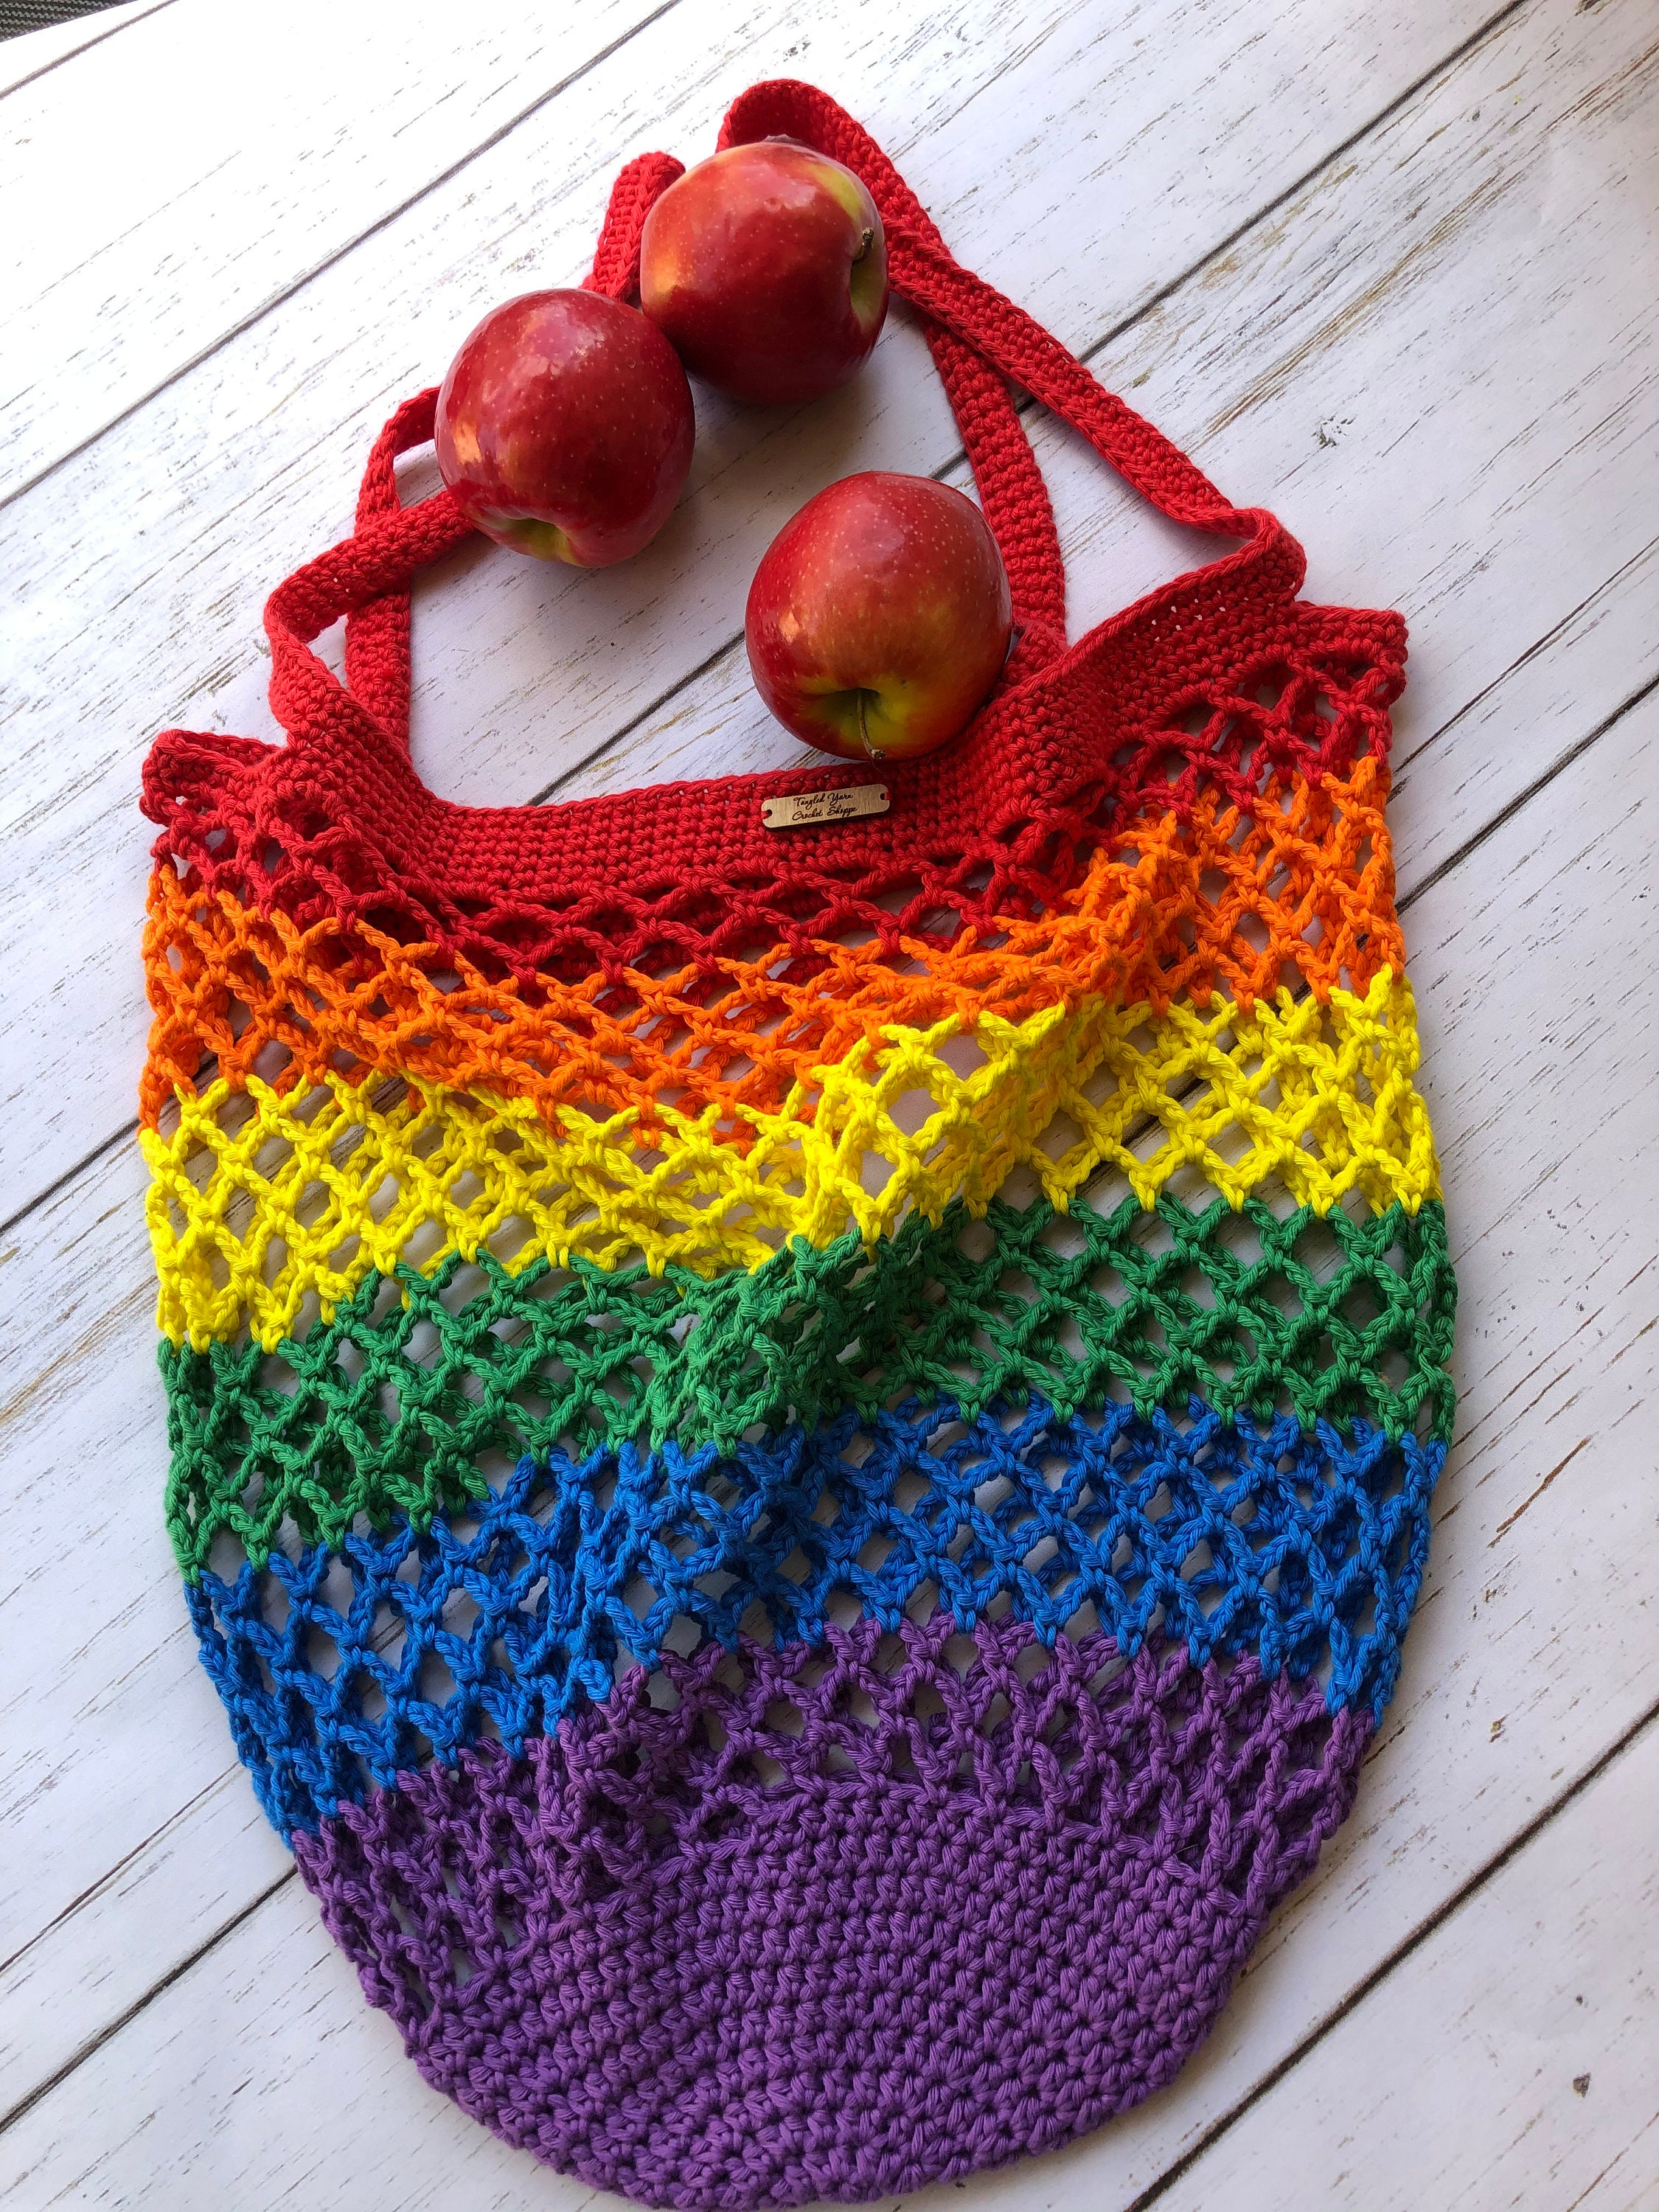 Rainbow Book Bag Colourful Market Bag Rainbow Tote Bag 